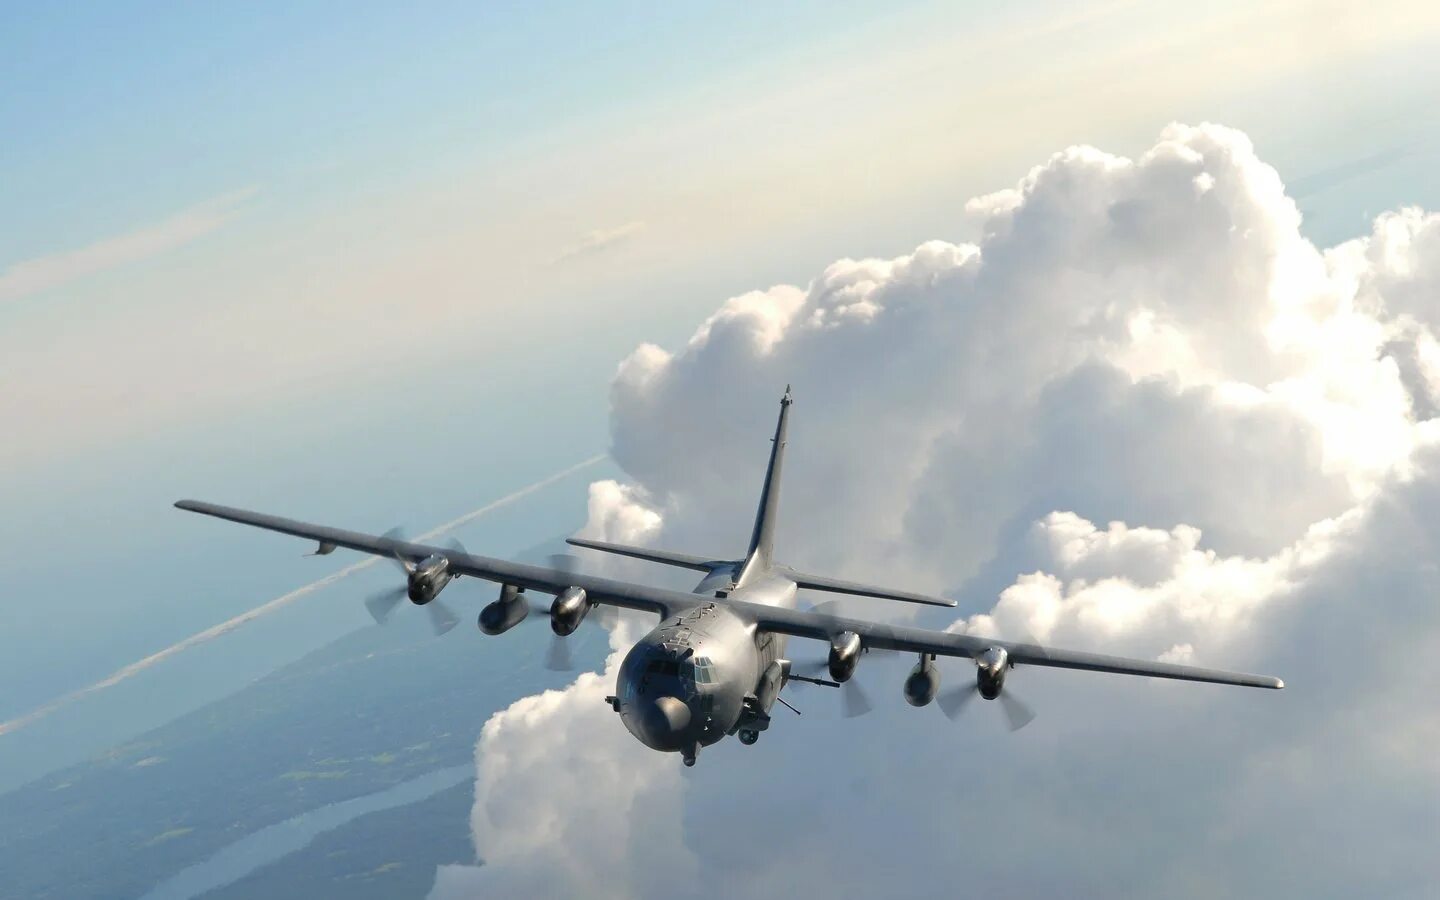 Самолет находящийся в полете преодолевает 140. Lockheed AC-130. Ганшип АС-130. Lockheed c-130 Hercules. AC-130 Spectre.